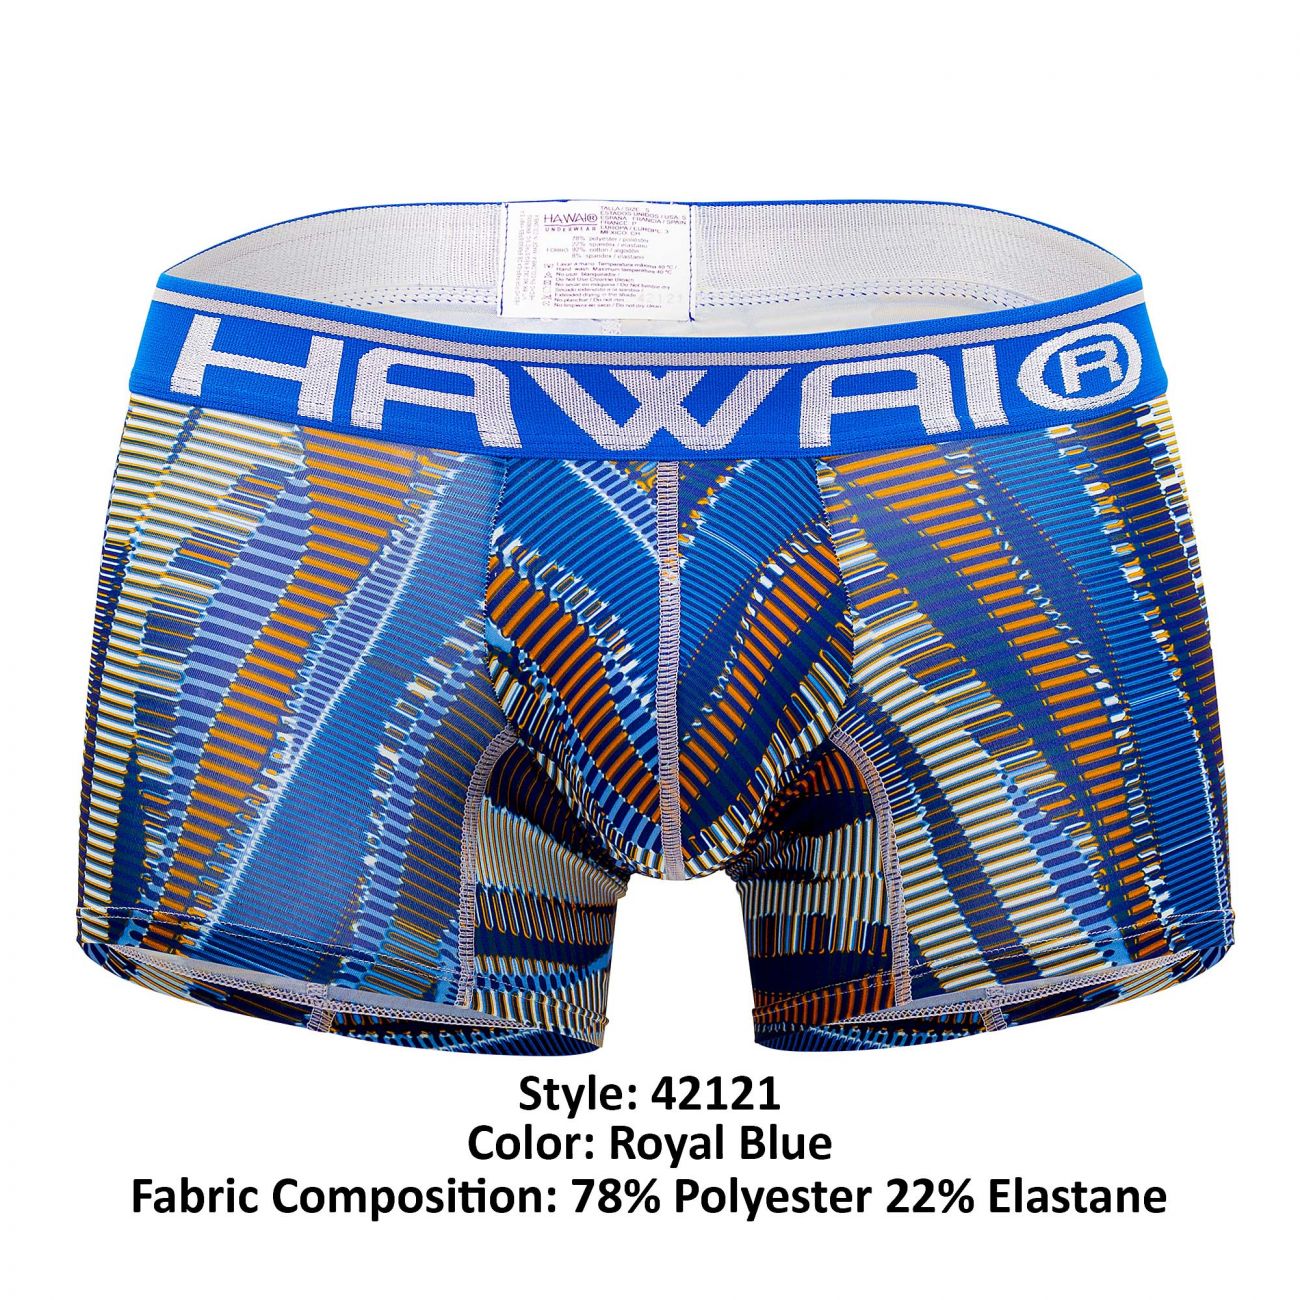 HAWAI Printed Athletic Trunks